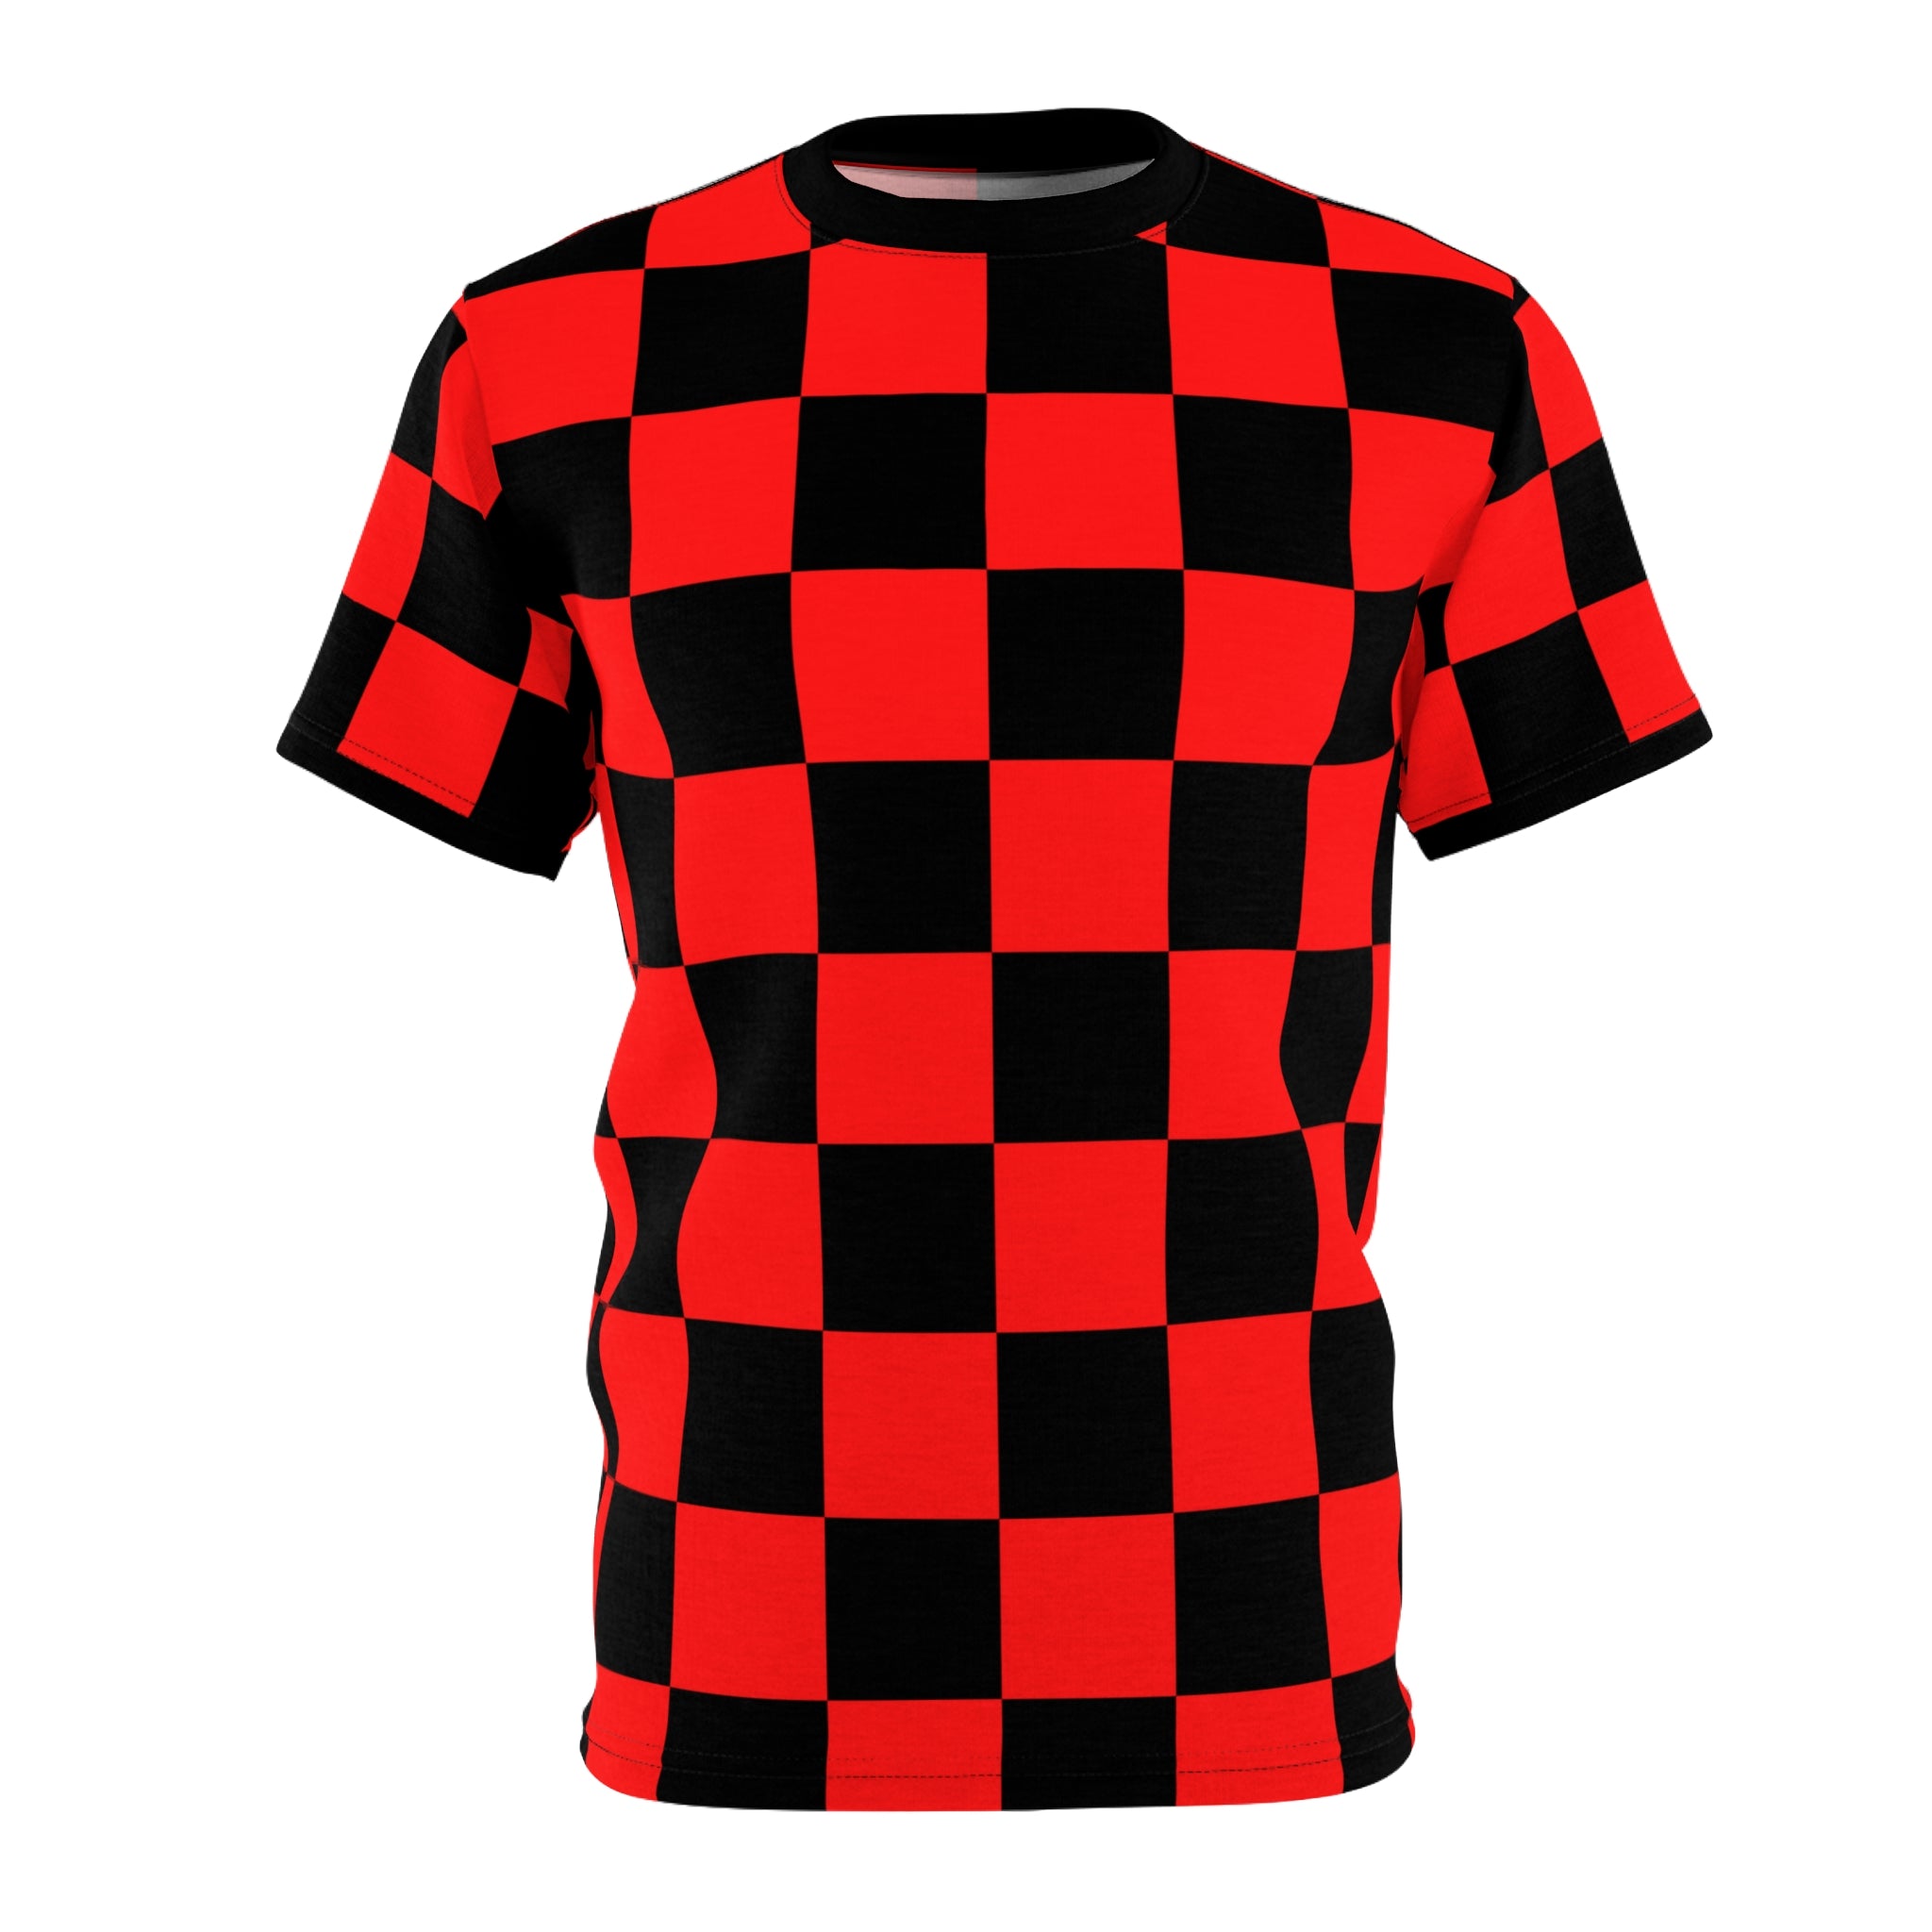 Checkers Black & Red Checkerboard Shirt